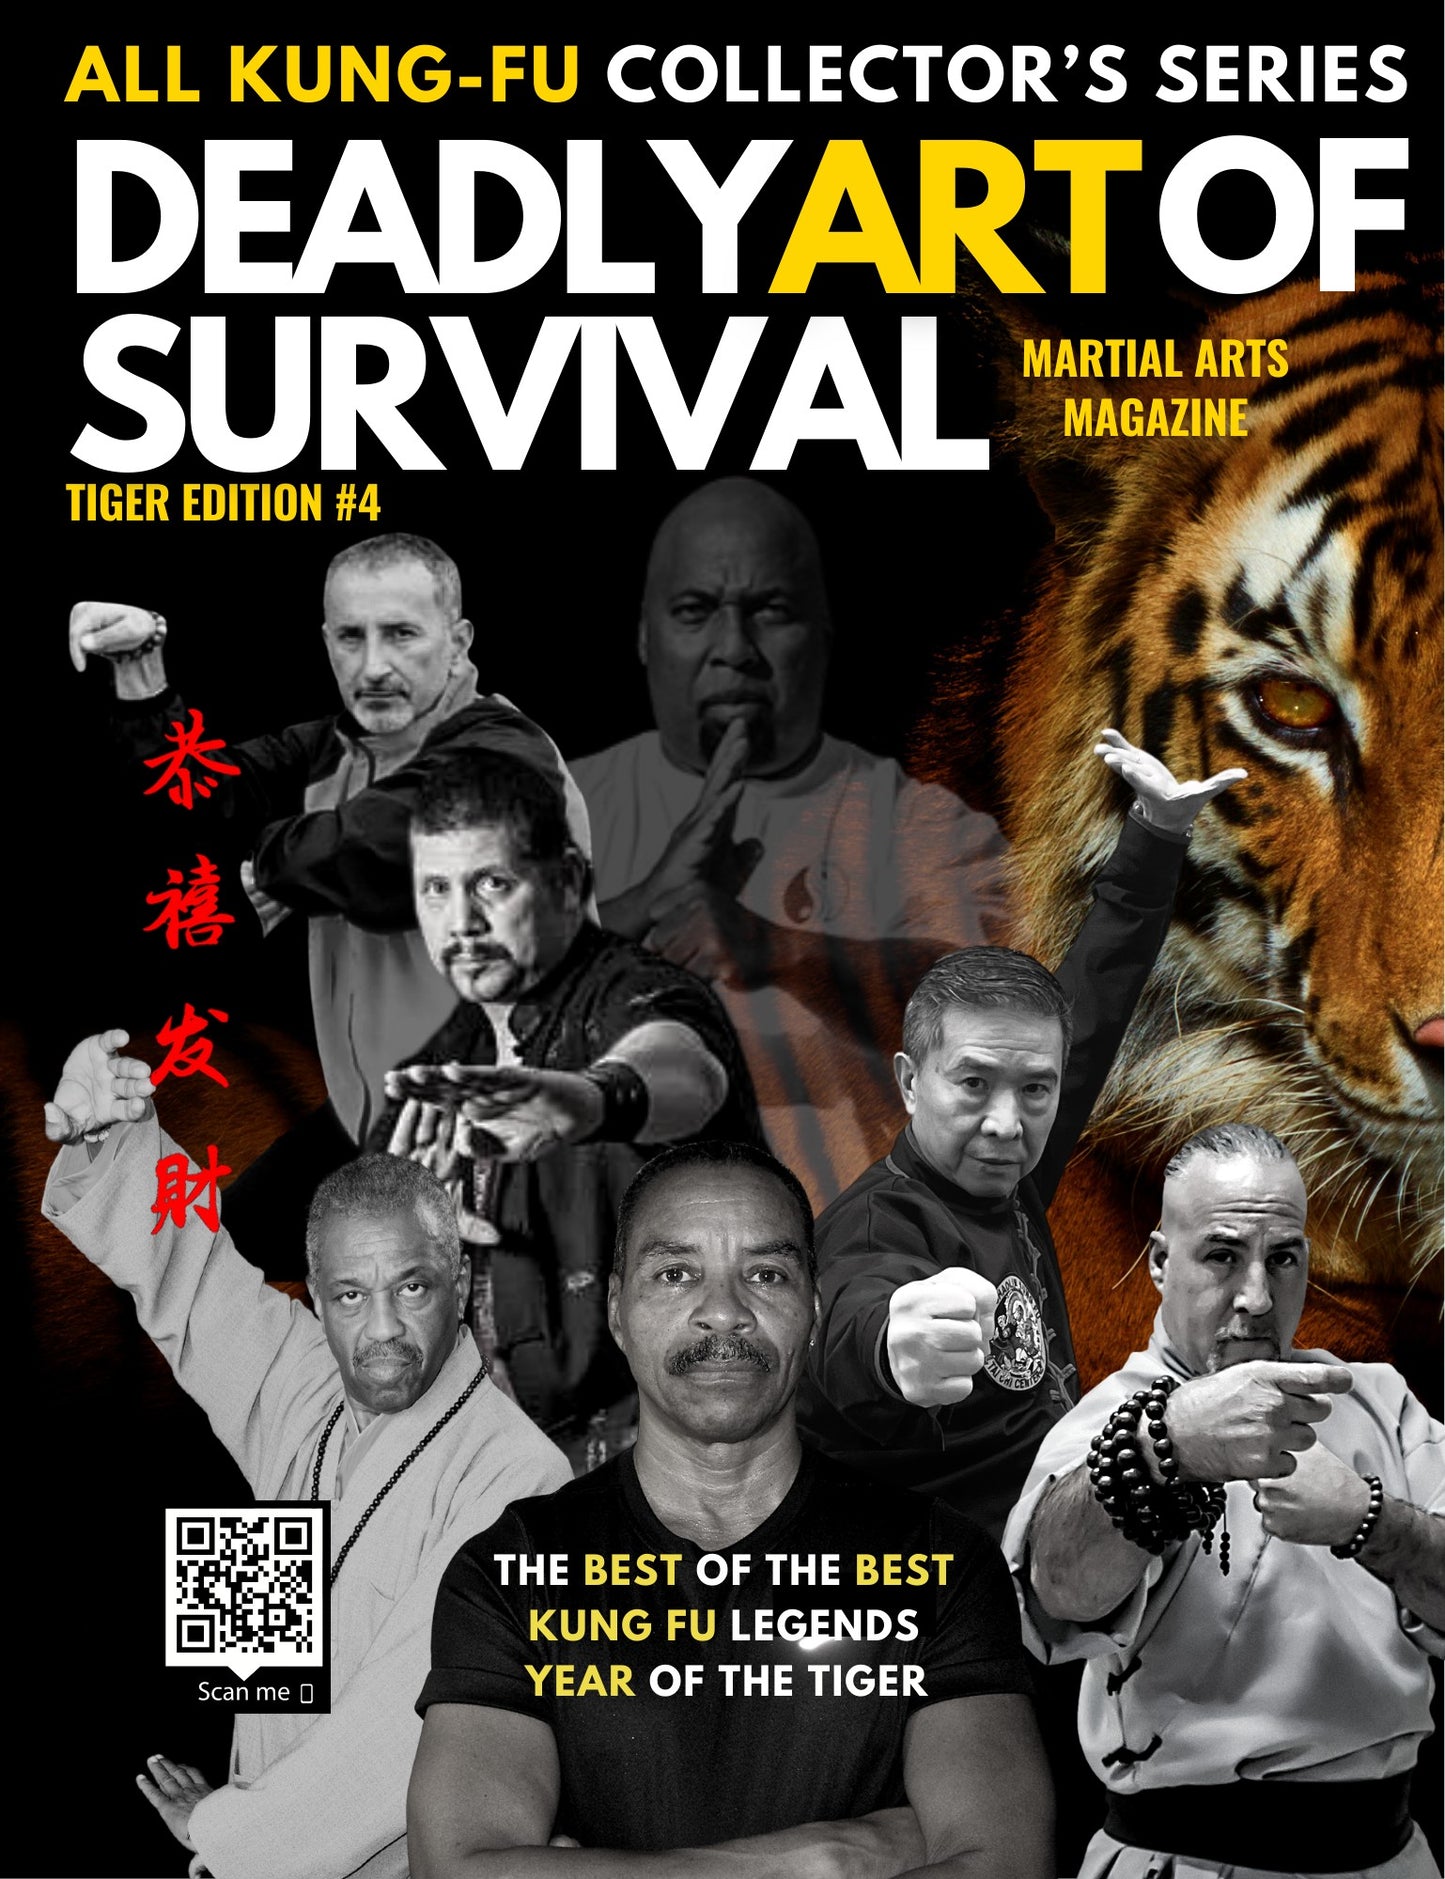 Tiger Edition #4 Deadly Art of Survival Magazine #1 Martial Arts Magazine Worldwide deadlyartofsurvival.com